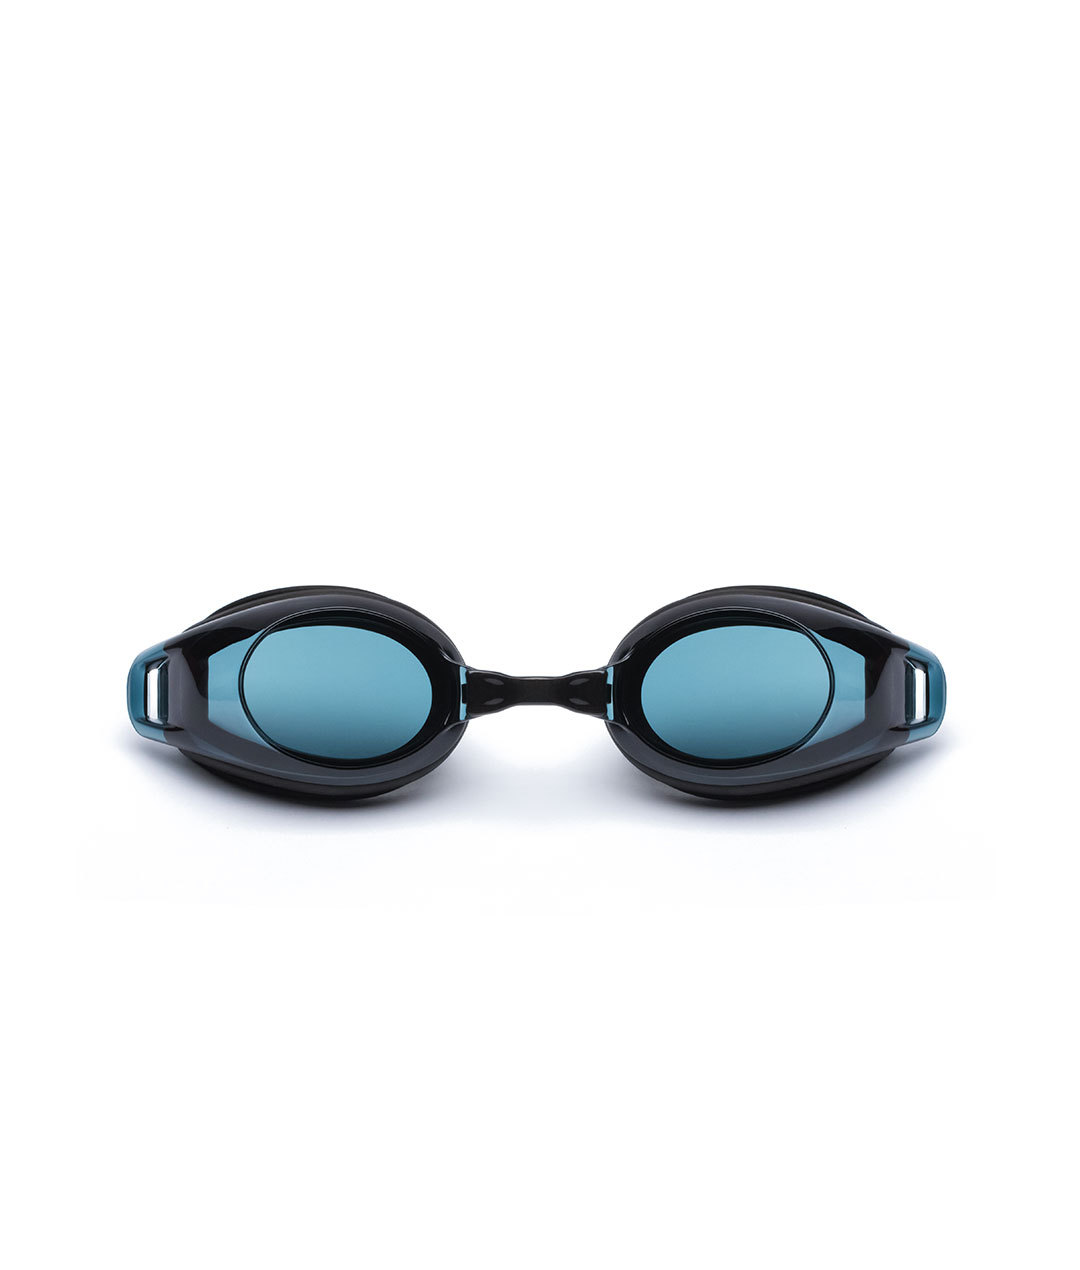 фото Очки для плавания xiaomi ts turok steinhardt adult swimming glasses черные